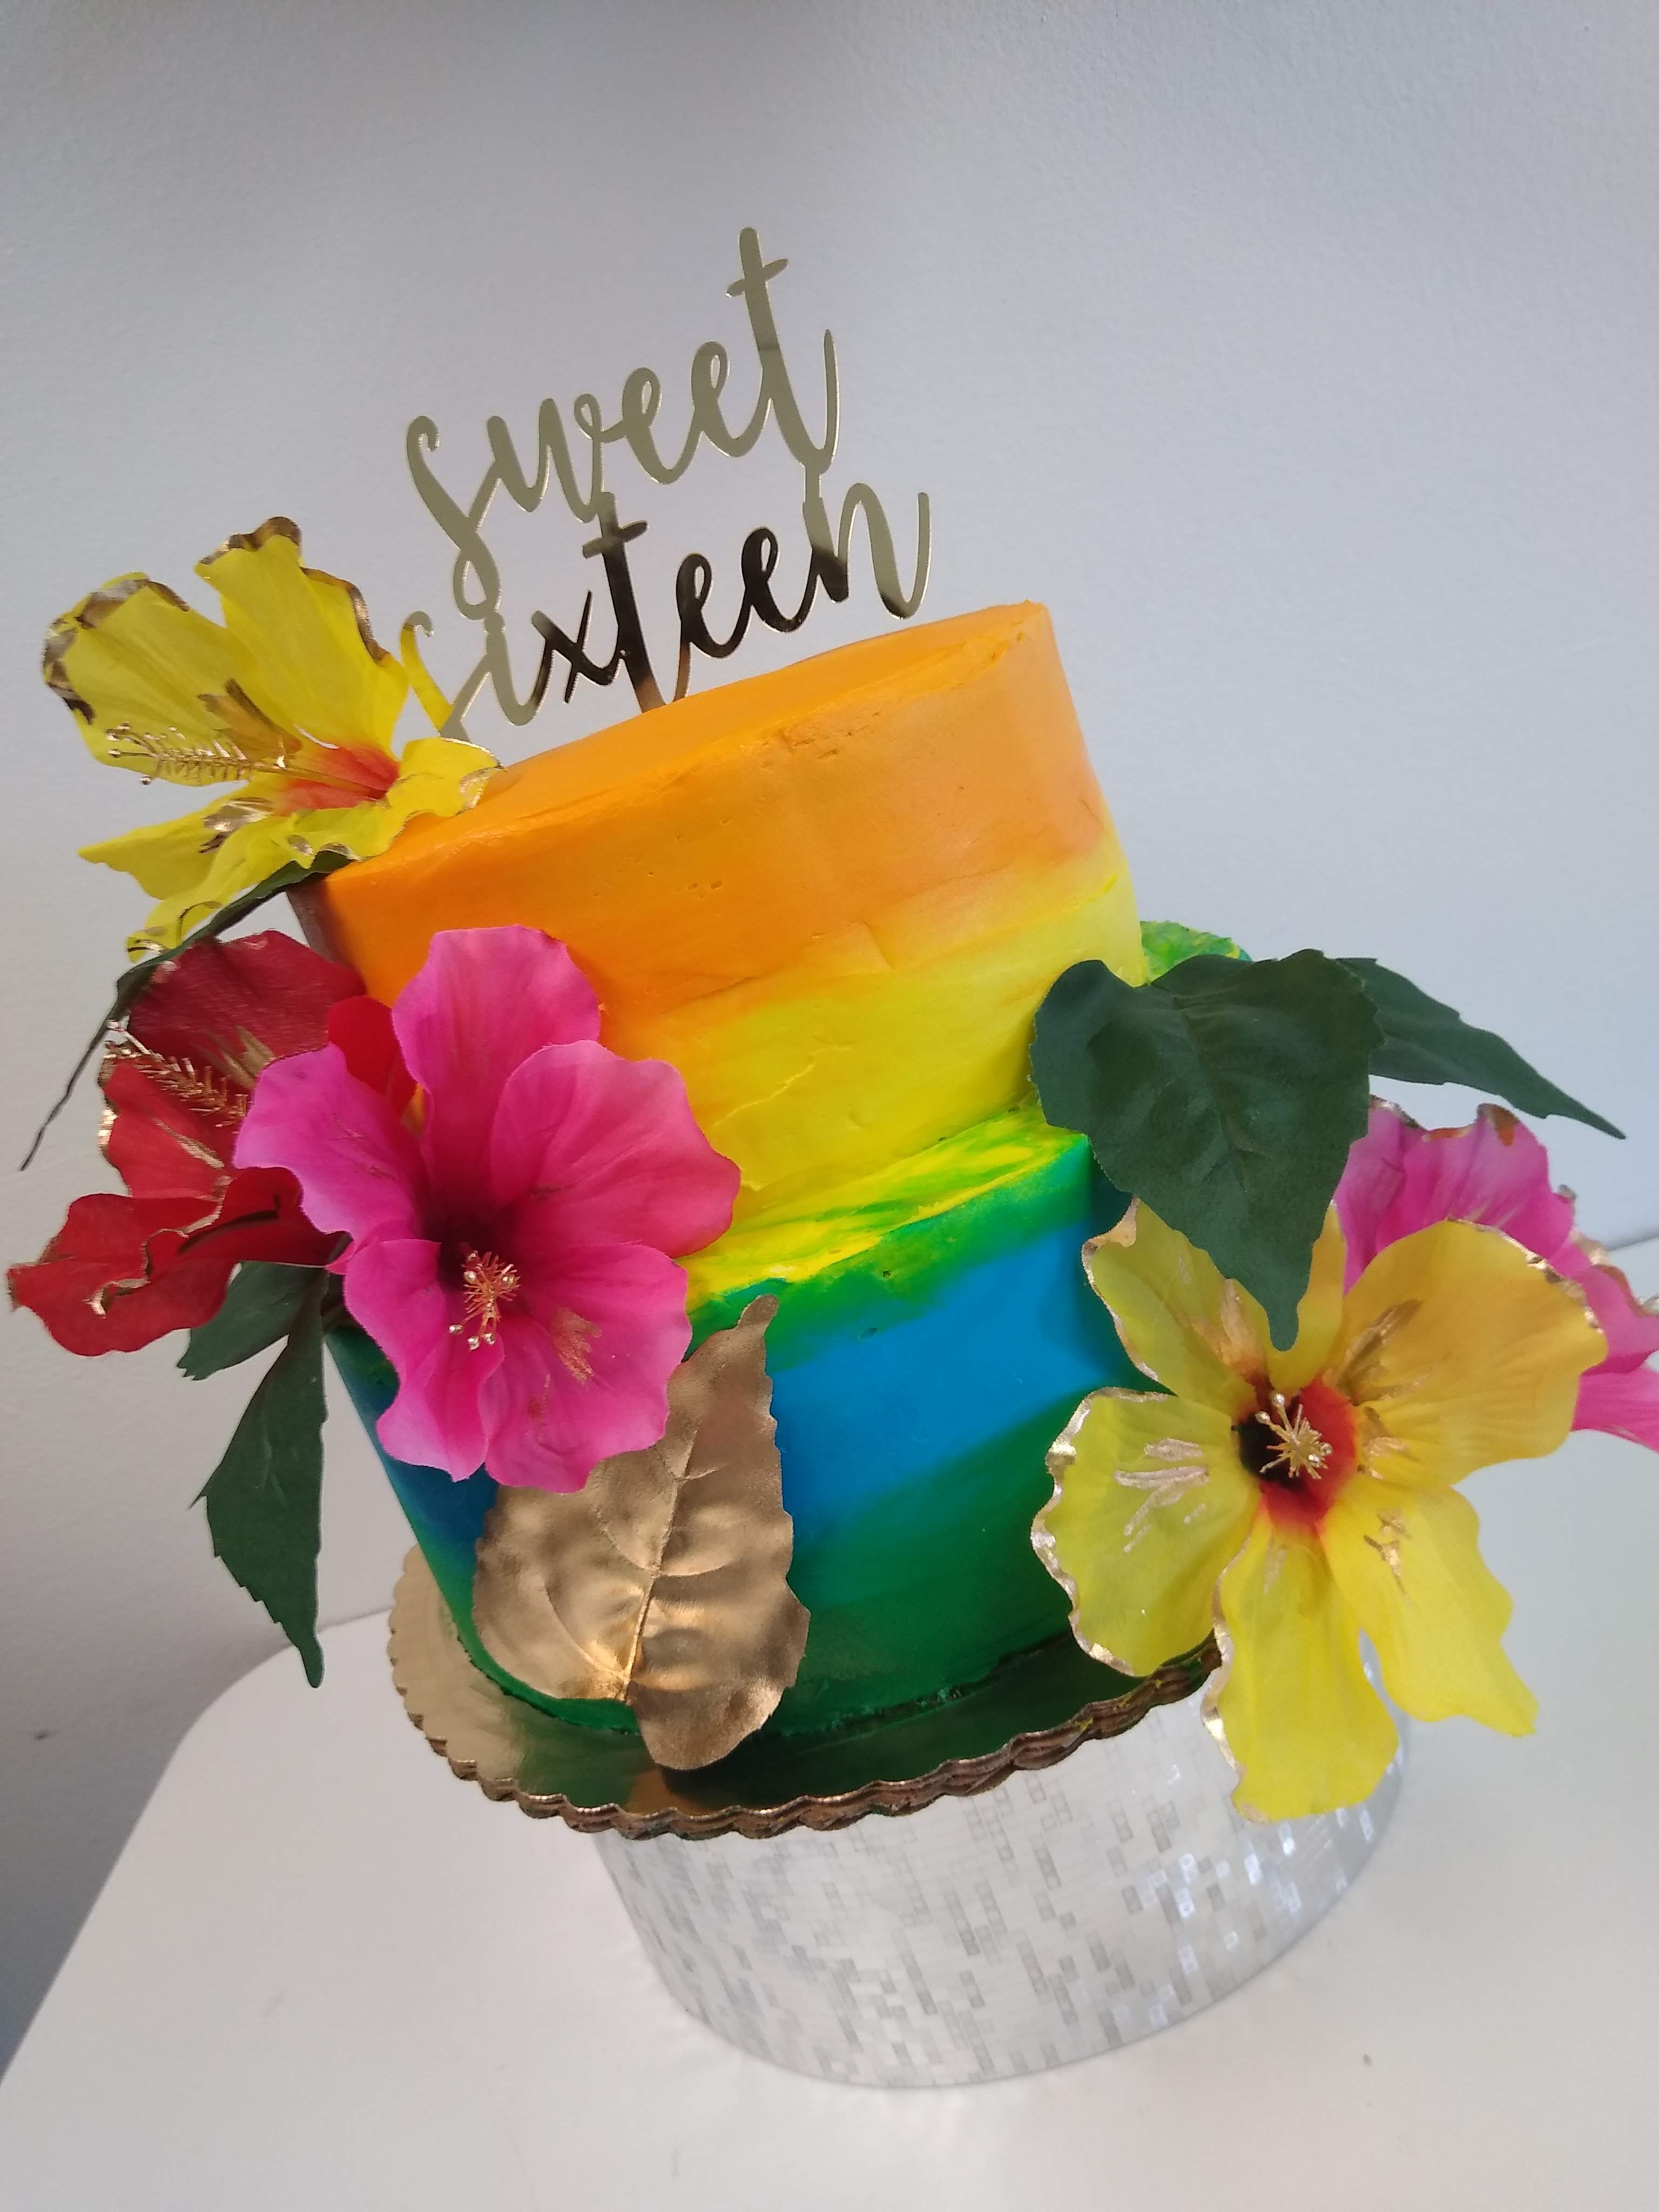 2 Tier Cake Recipe || Two Tier Birthday Cake || Two Tier Vanilla &  Chocolate Cake - YouTube